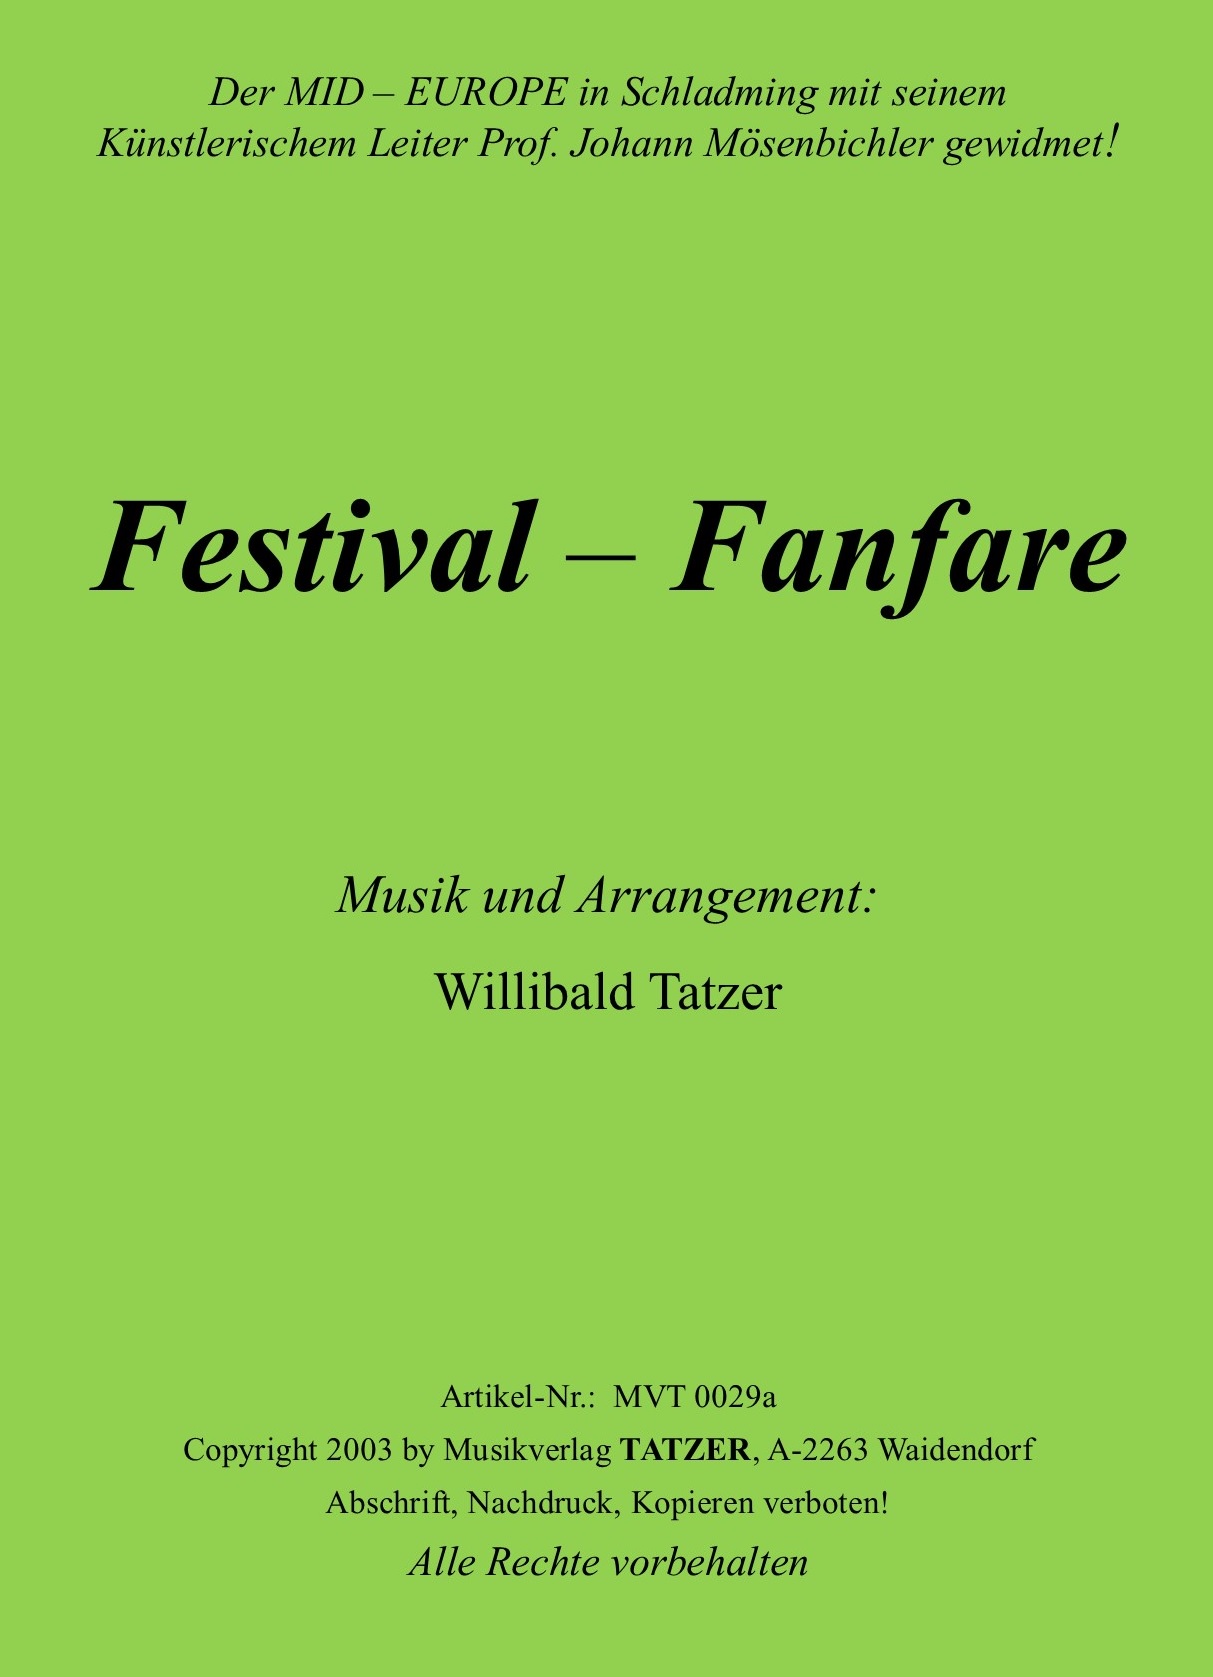 Festival Fanfare (B-C), Willibald Tatzer